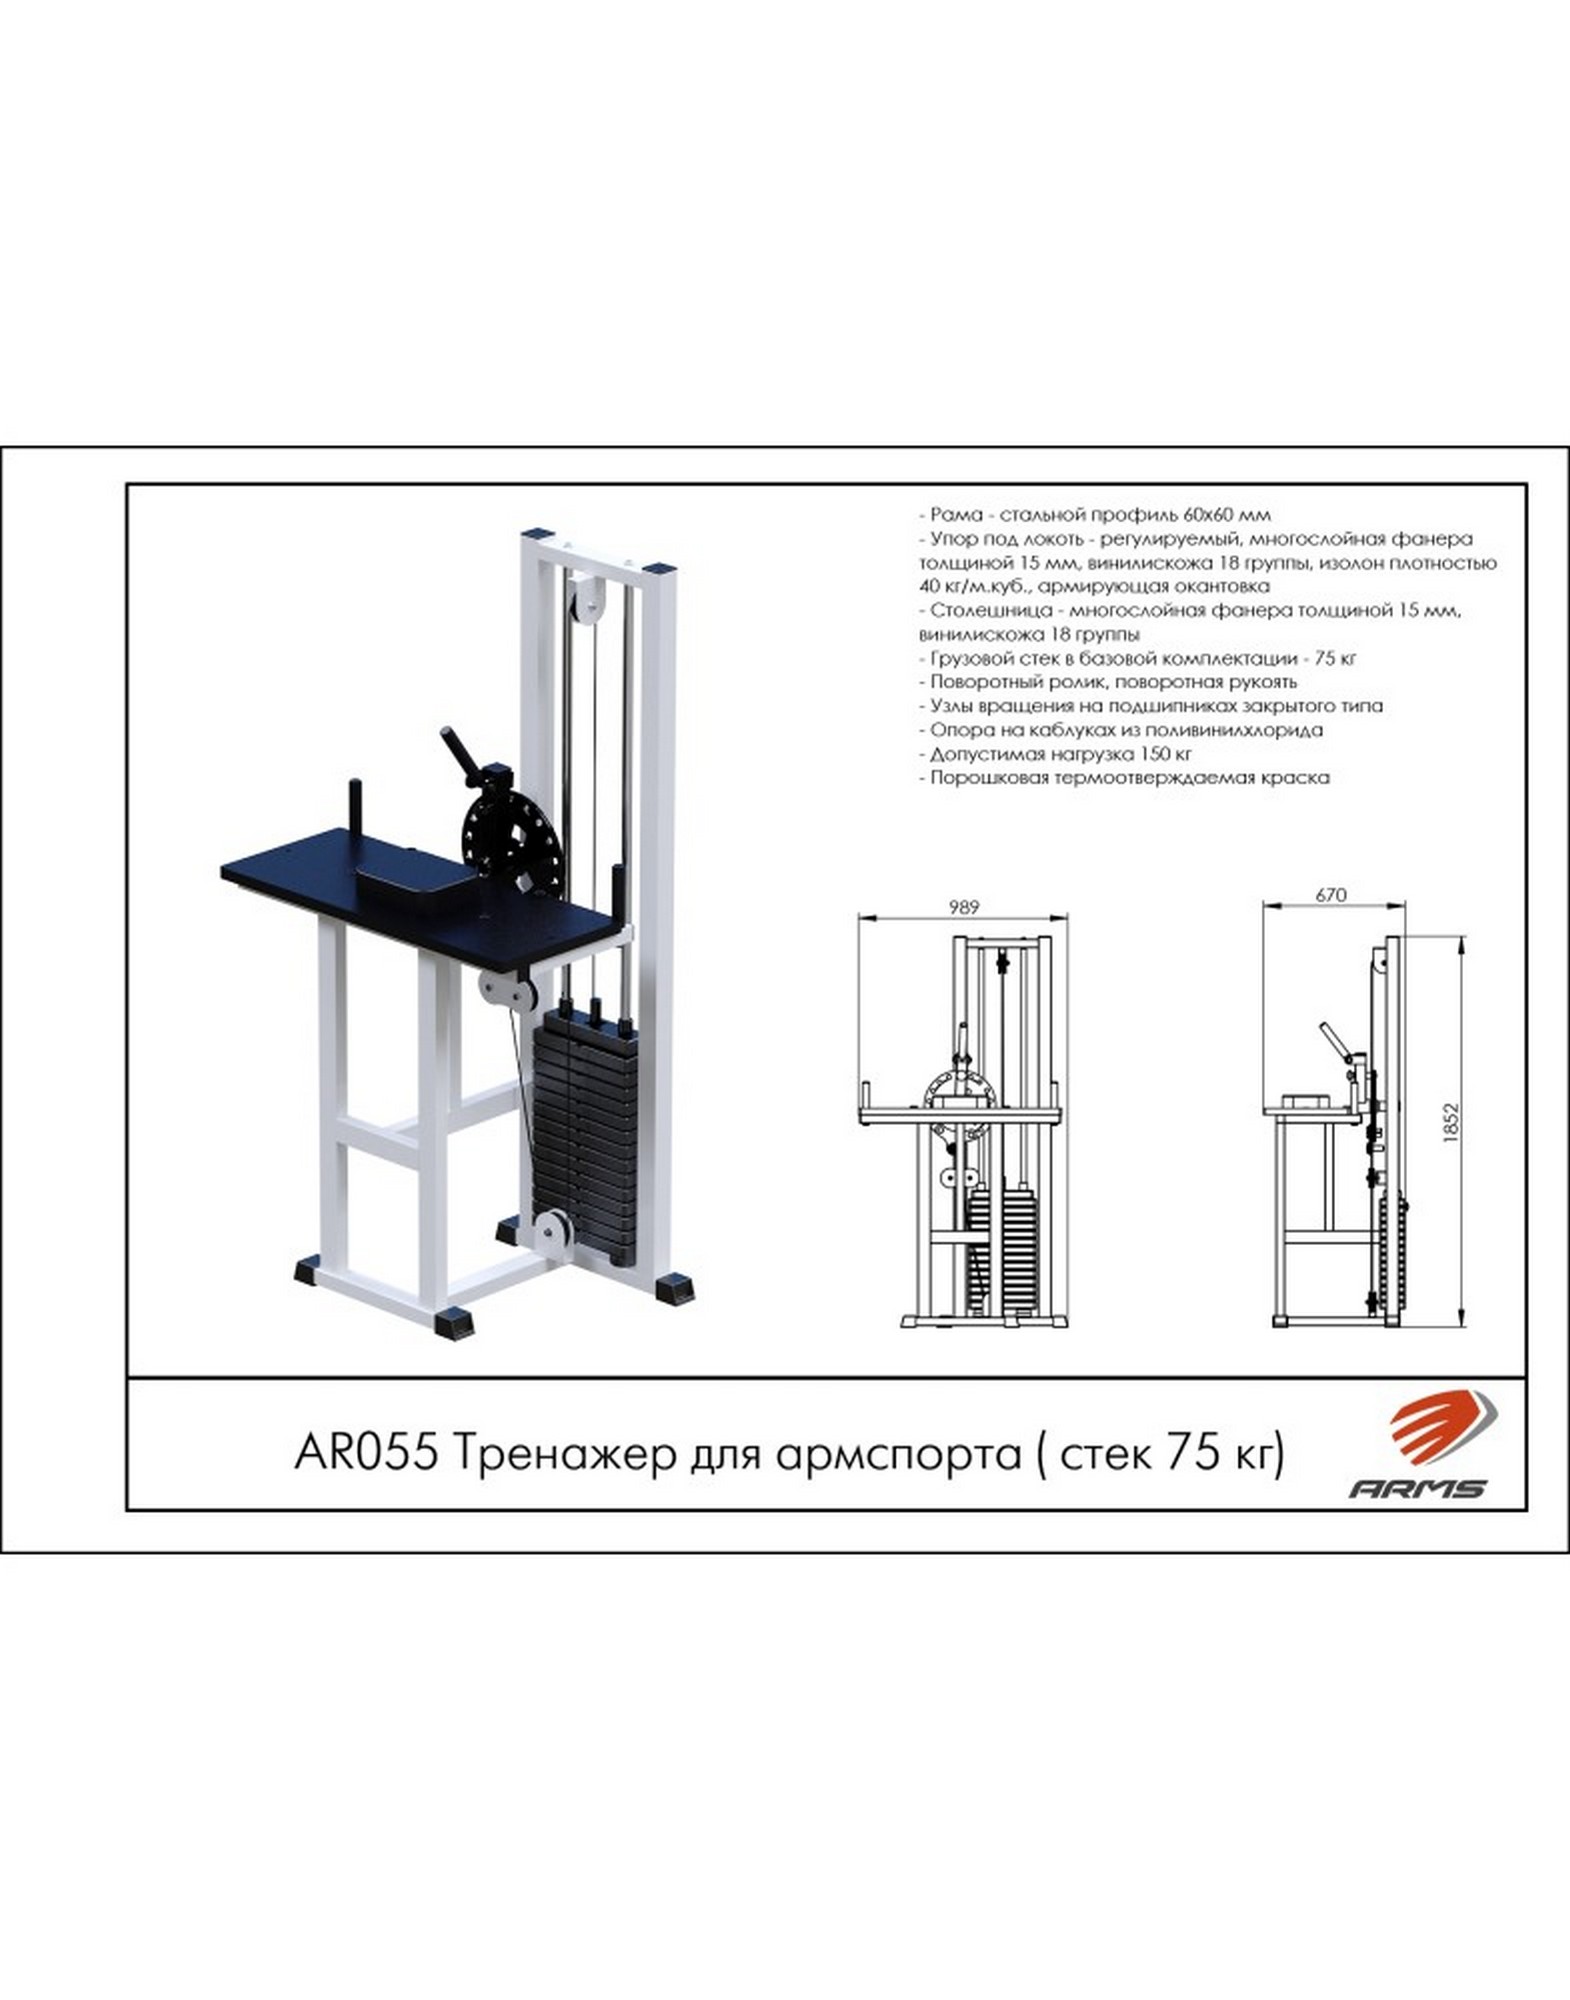 Тренажер для армспорта ARMS (стек 75кг) AR055 1570_2000